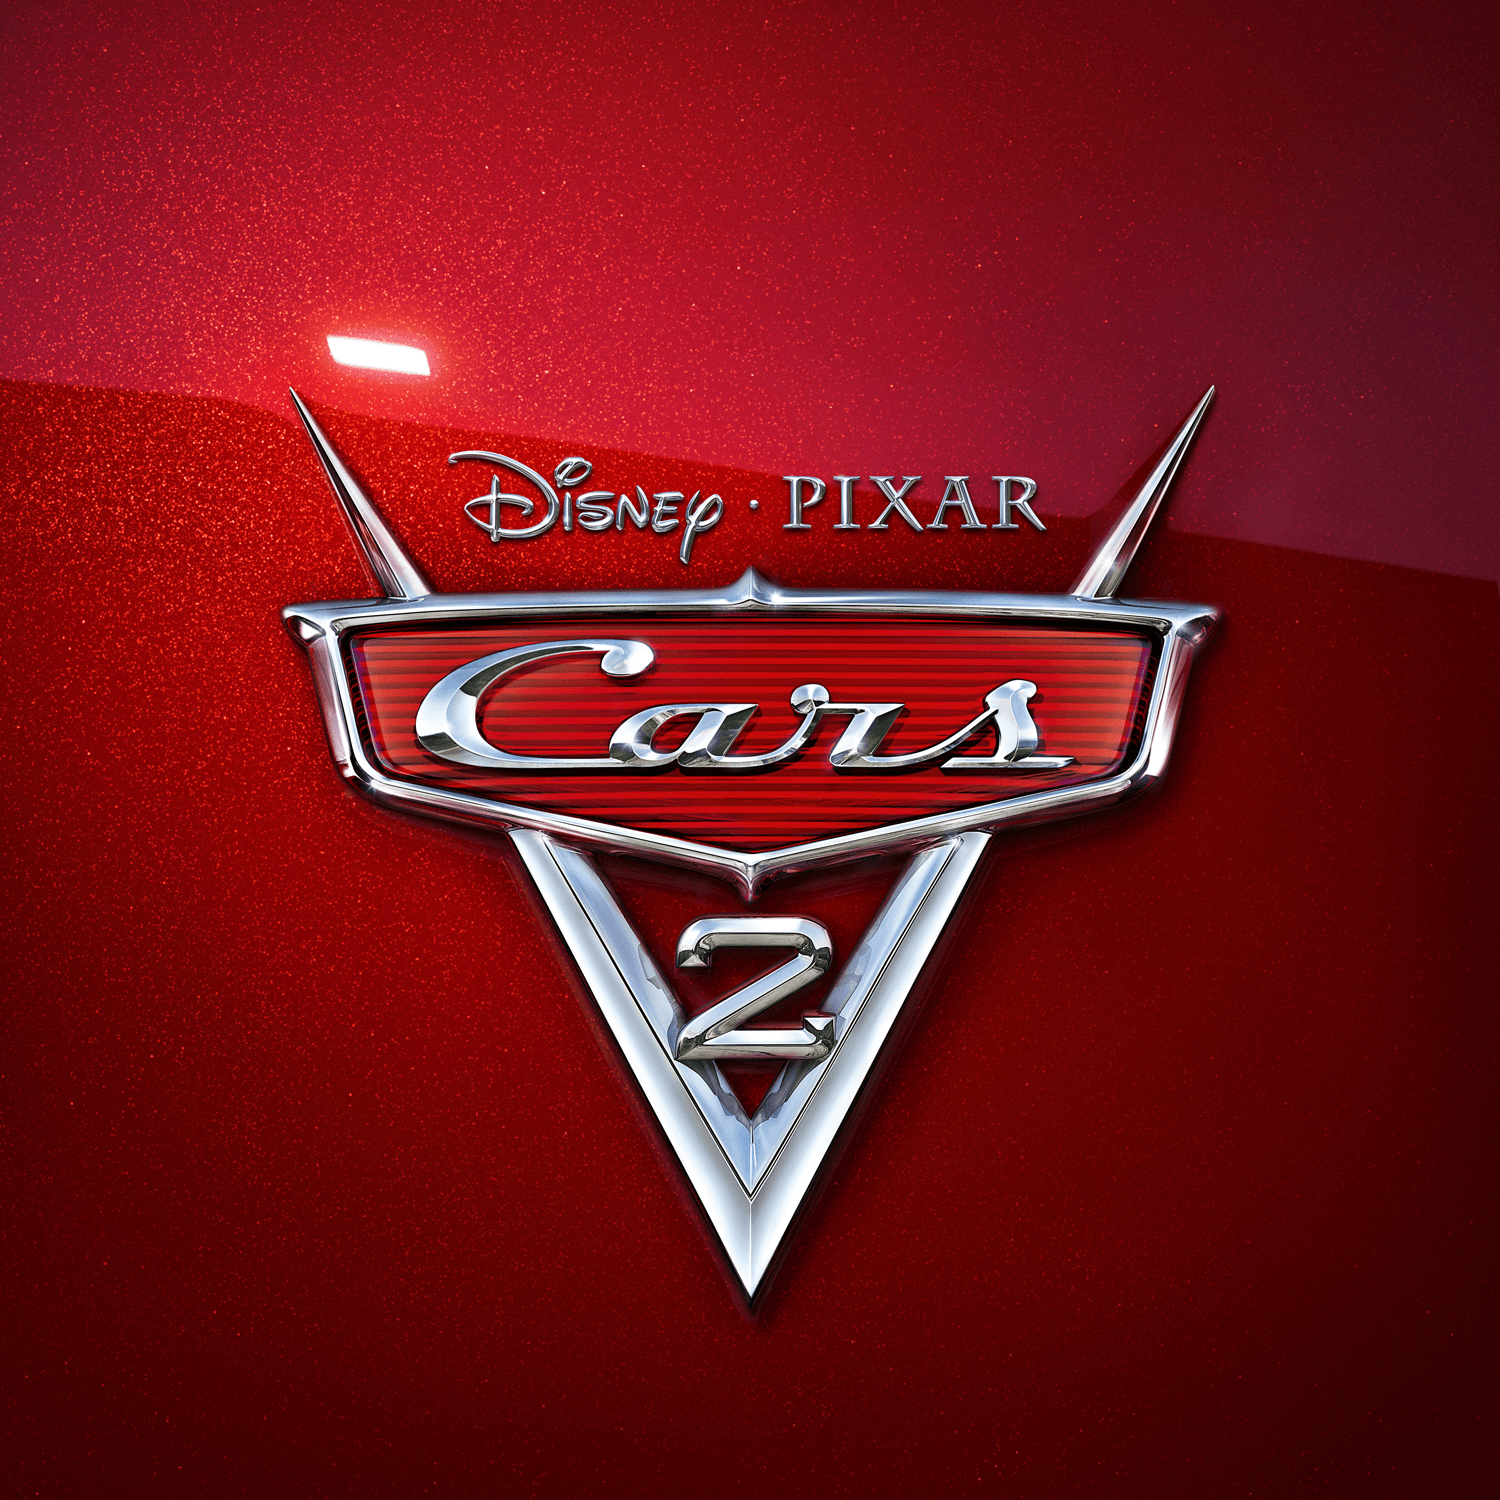 Disney Cars 1 Logo - Cars 2 Updated Logo